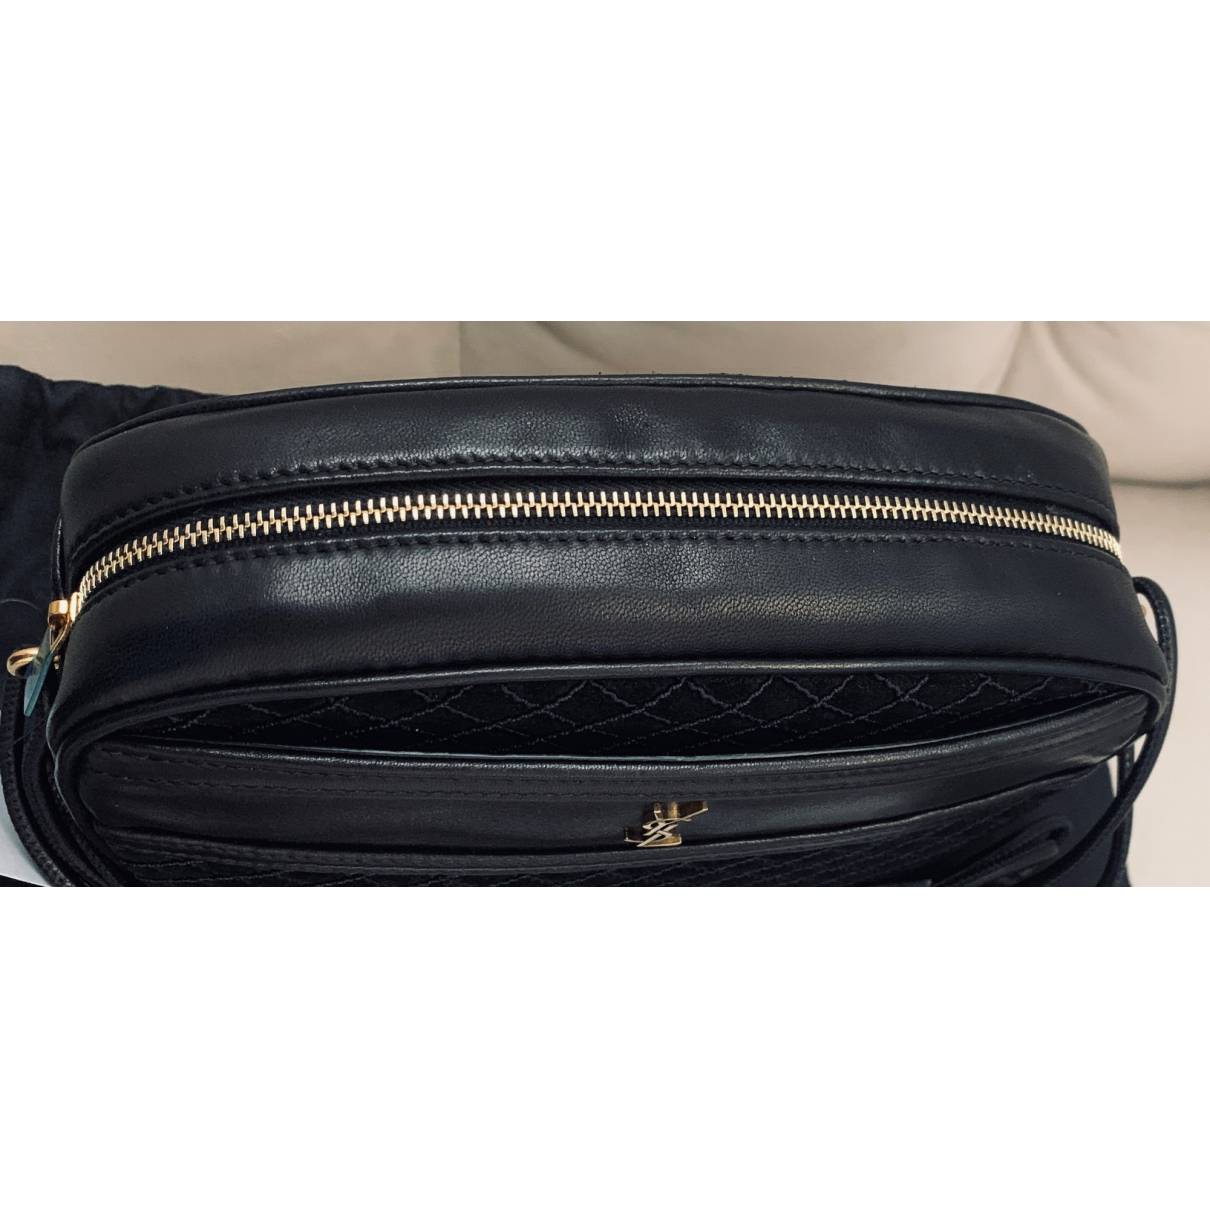 Victoire leather handbag Saint Laurent